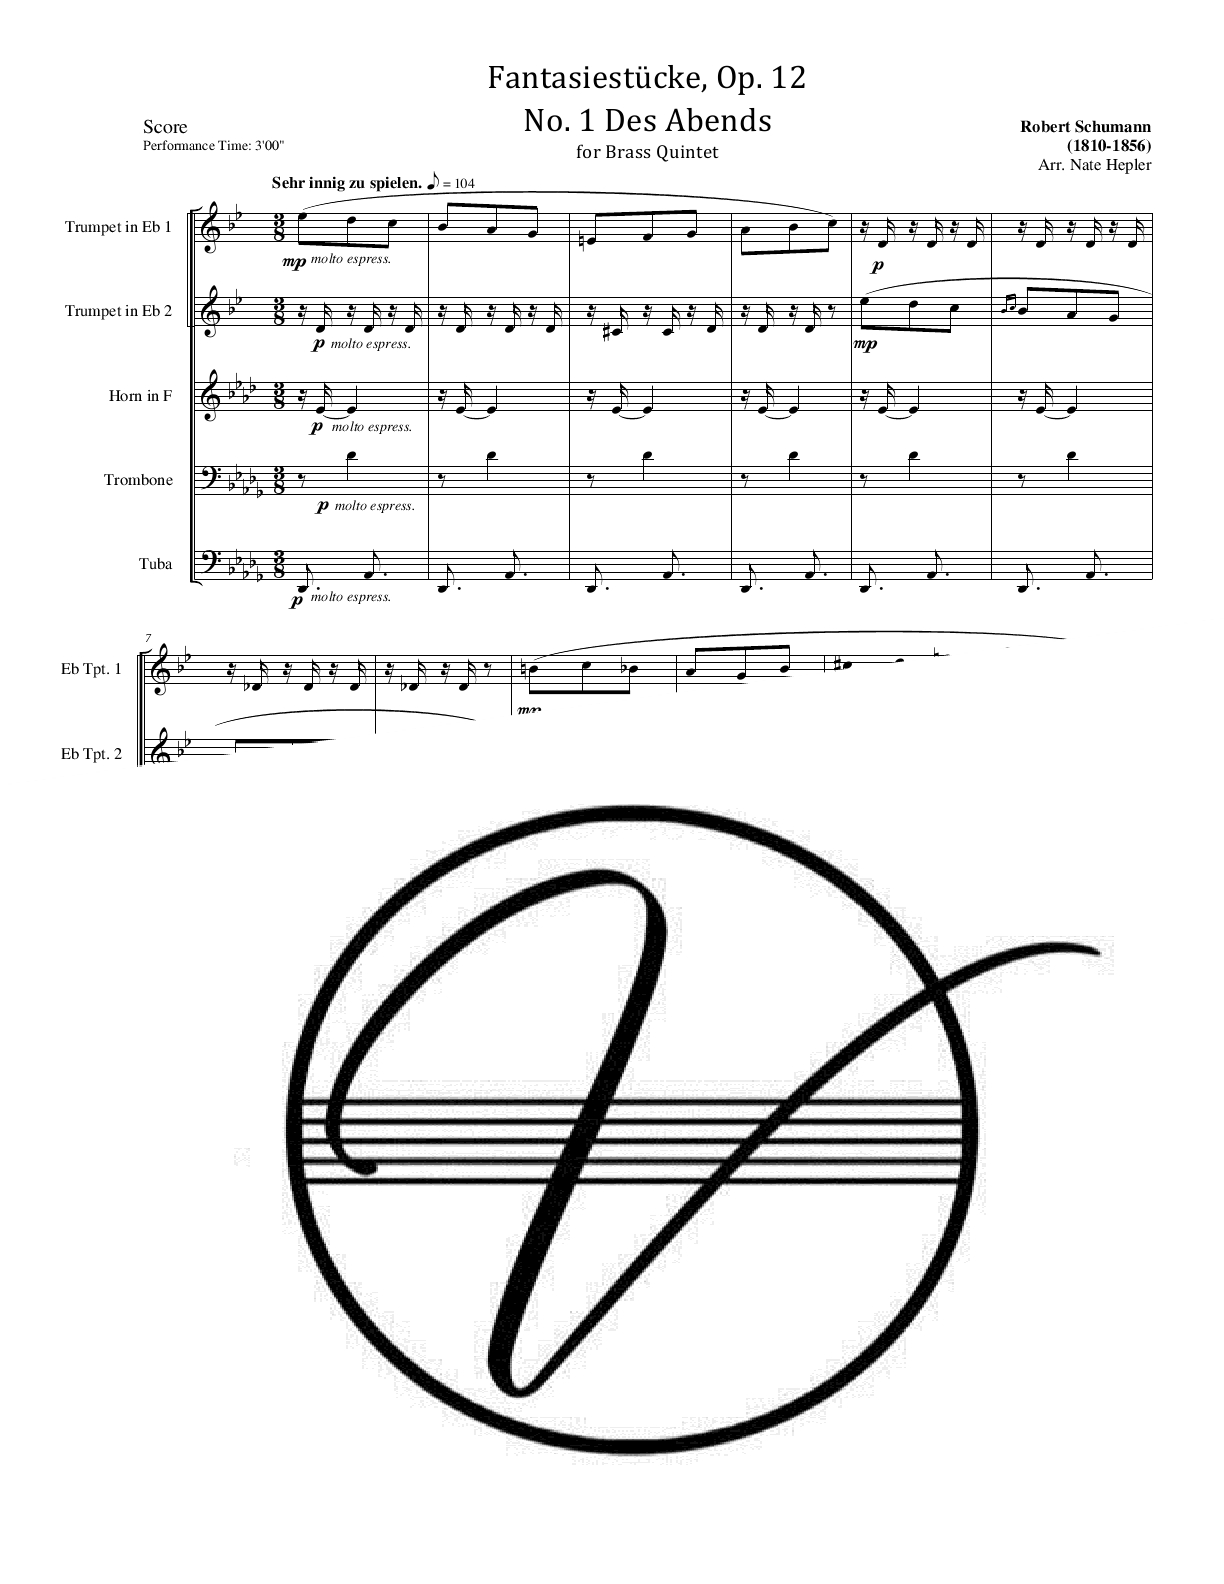 Schumann - Fantasiestucke, Op. 12, No. 1 - Des Abends (BQ)